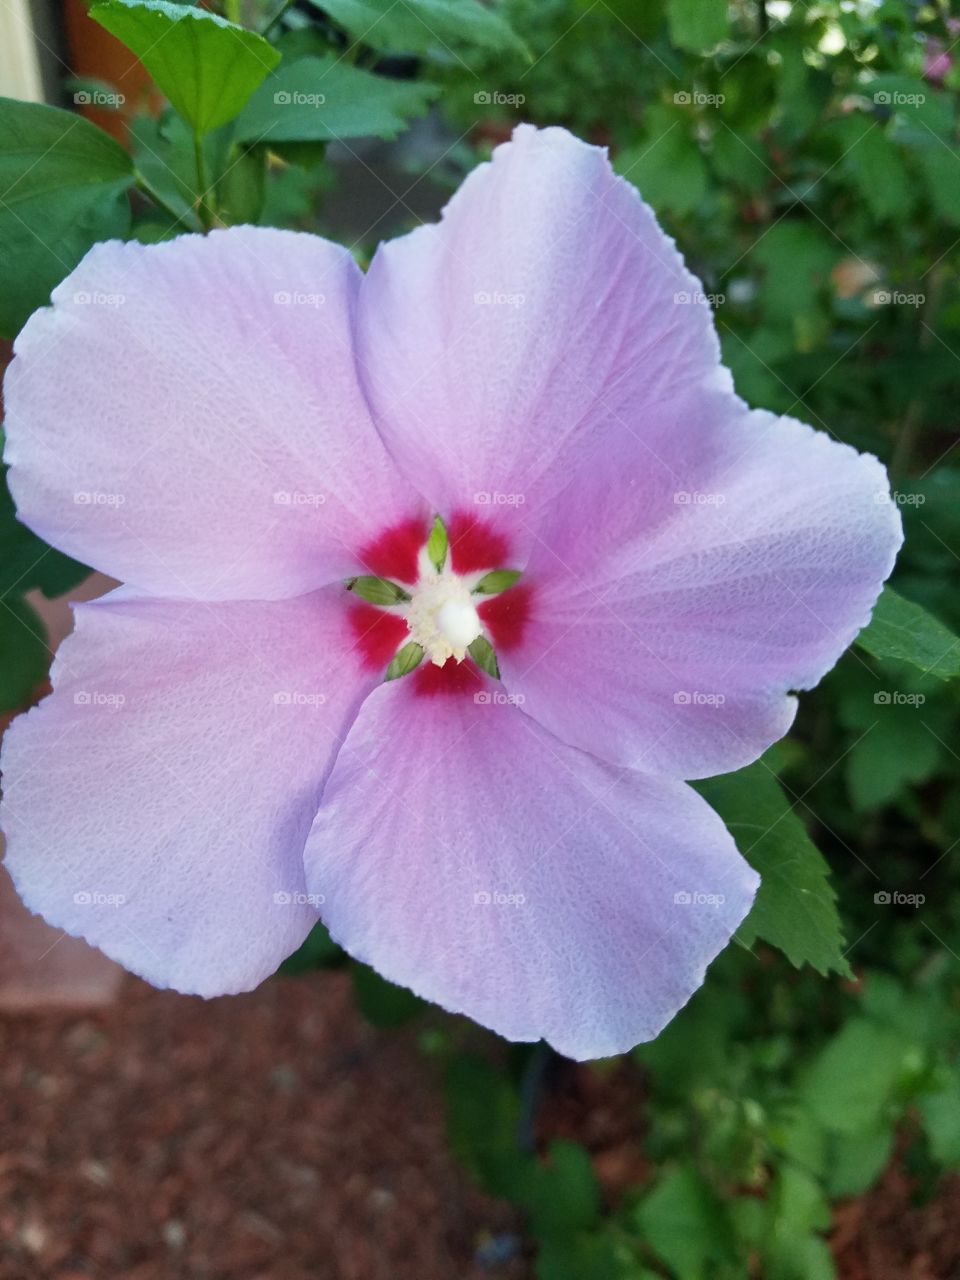 beautiful pinkish purple rose of Sharon hibiscus flower